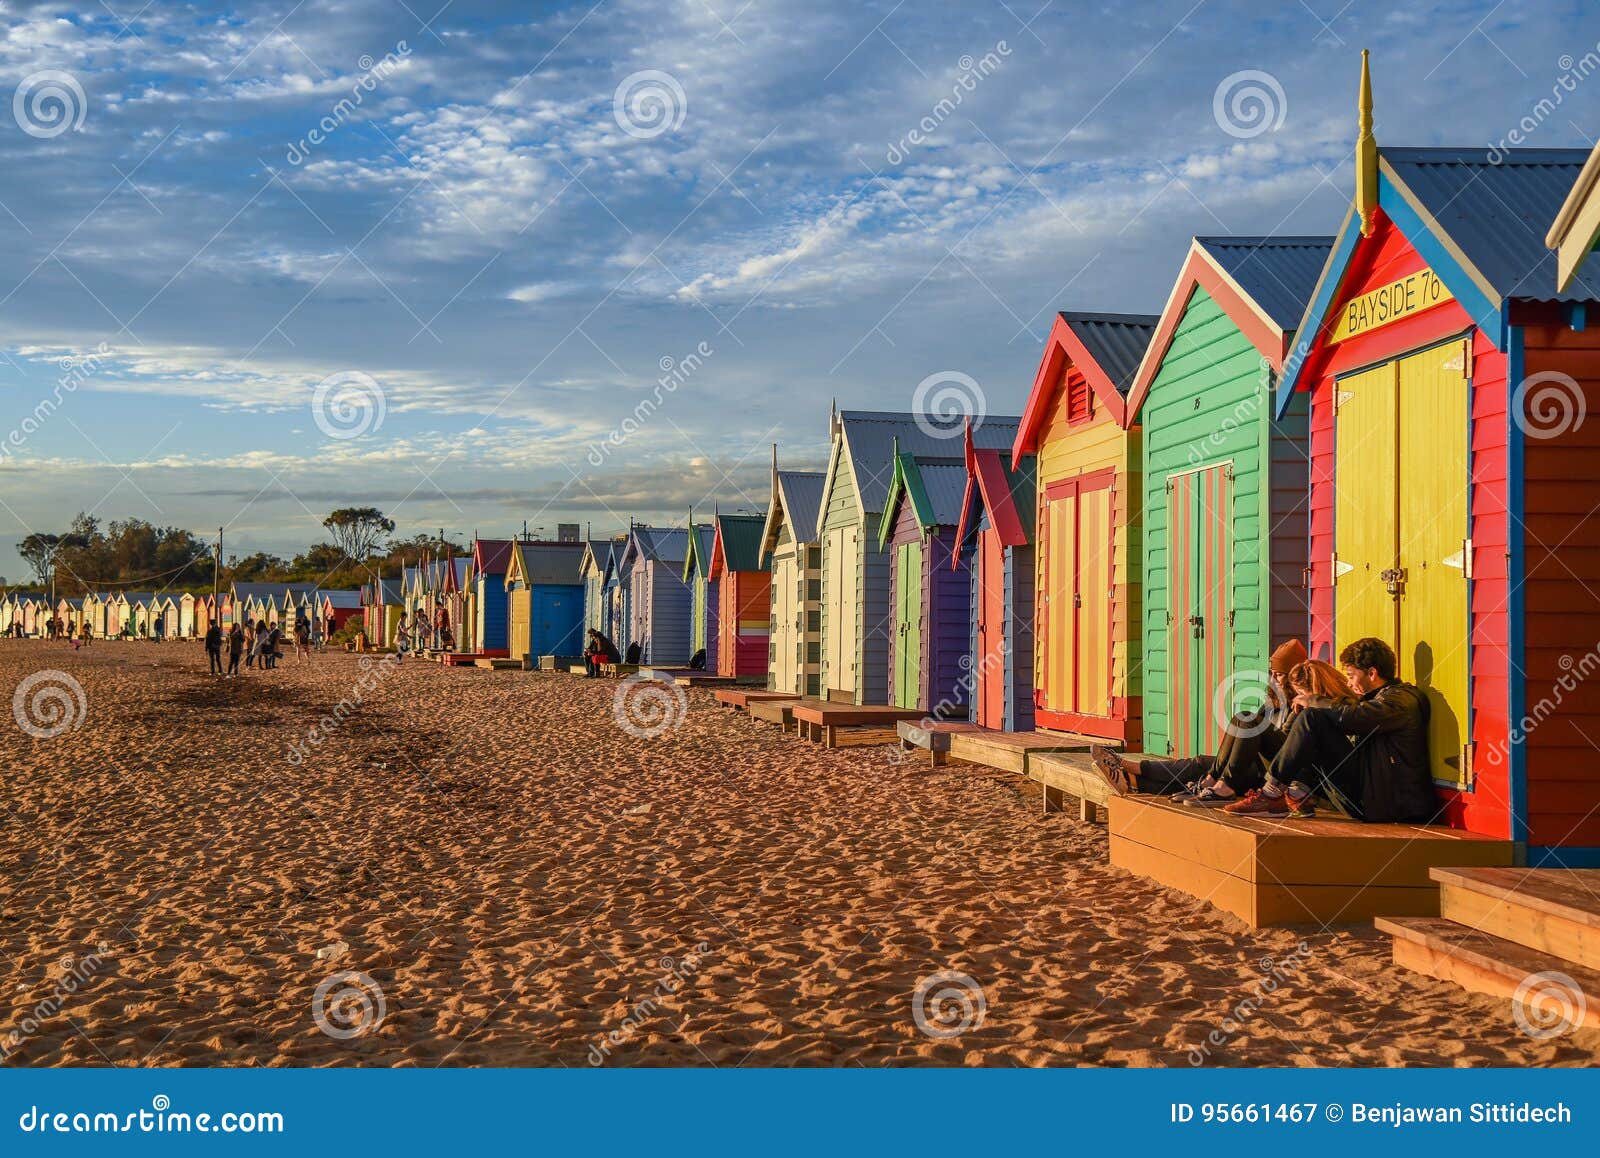 Het baden van dozen in Brighton Beach, Melbourne. MELBOURNE, AUSTRALIË - JULI 18, 2016: De toeristen zitten op dek van het baden van dozen in Brighton Beach dichtbij Melbourne, Australië